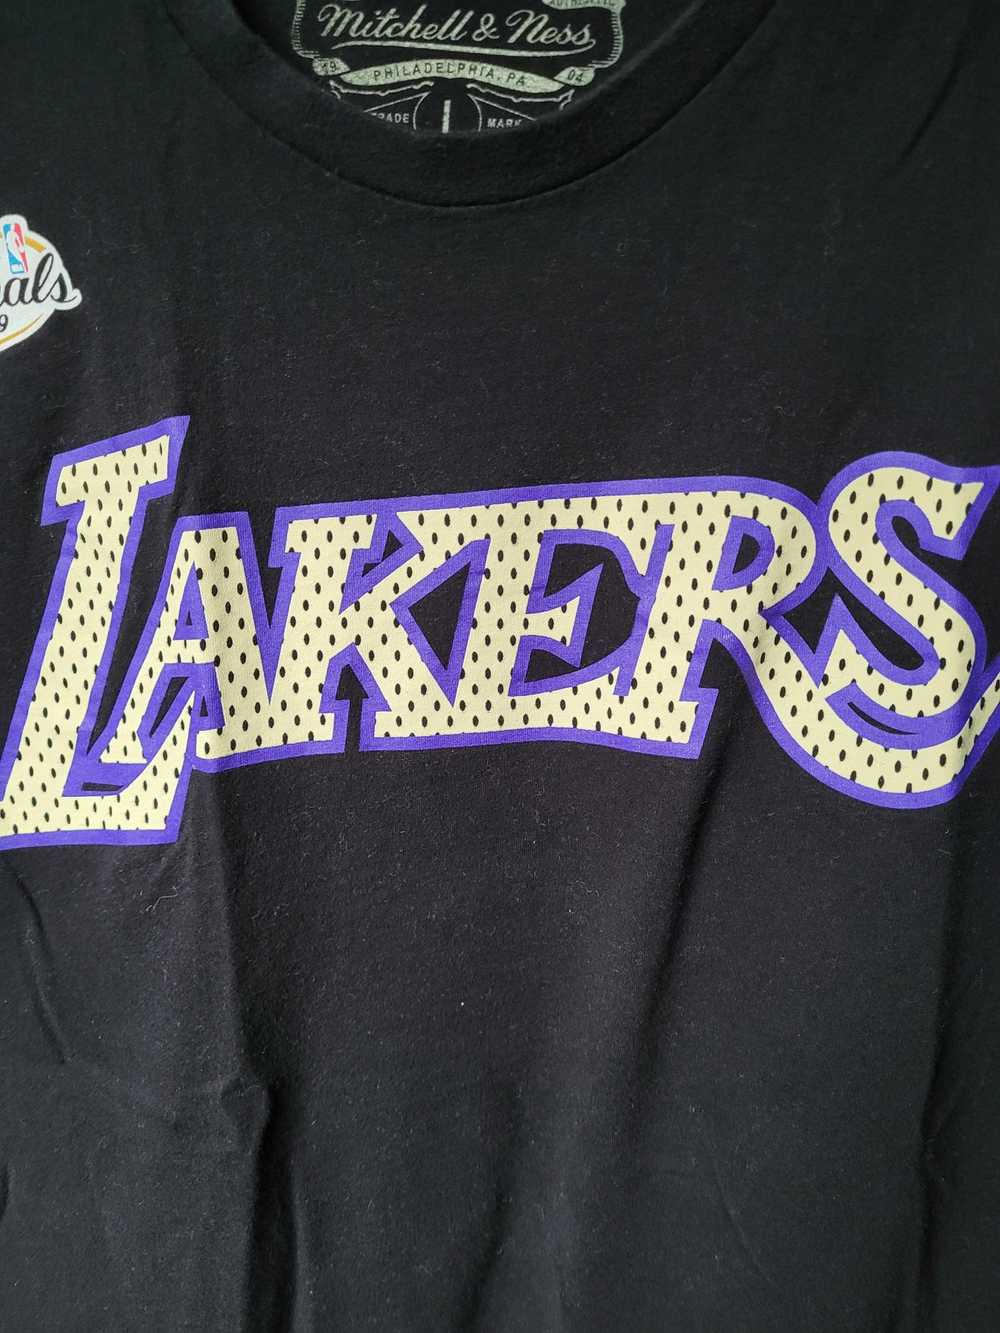 Lakers Lakers logo tee - image 2